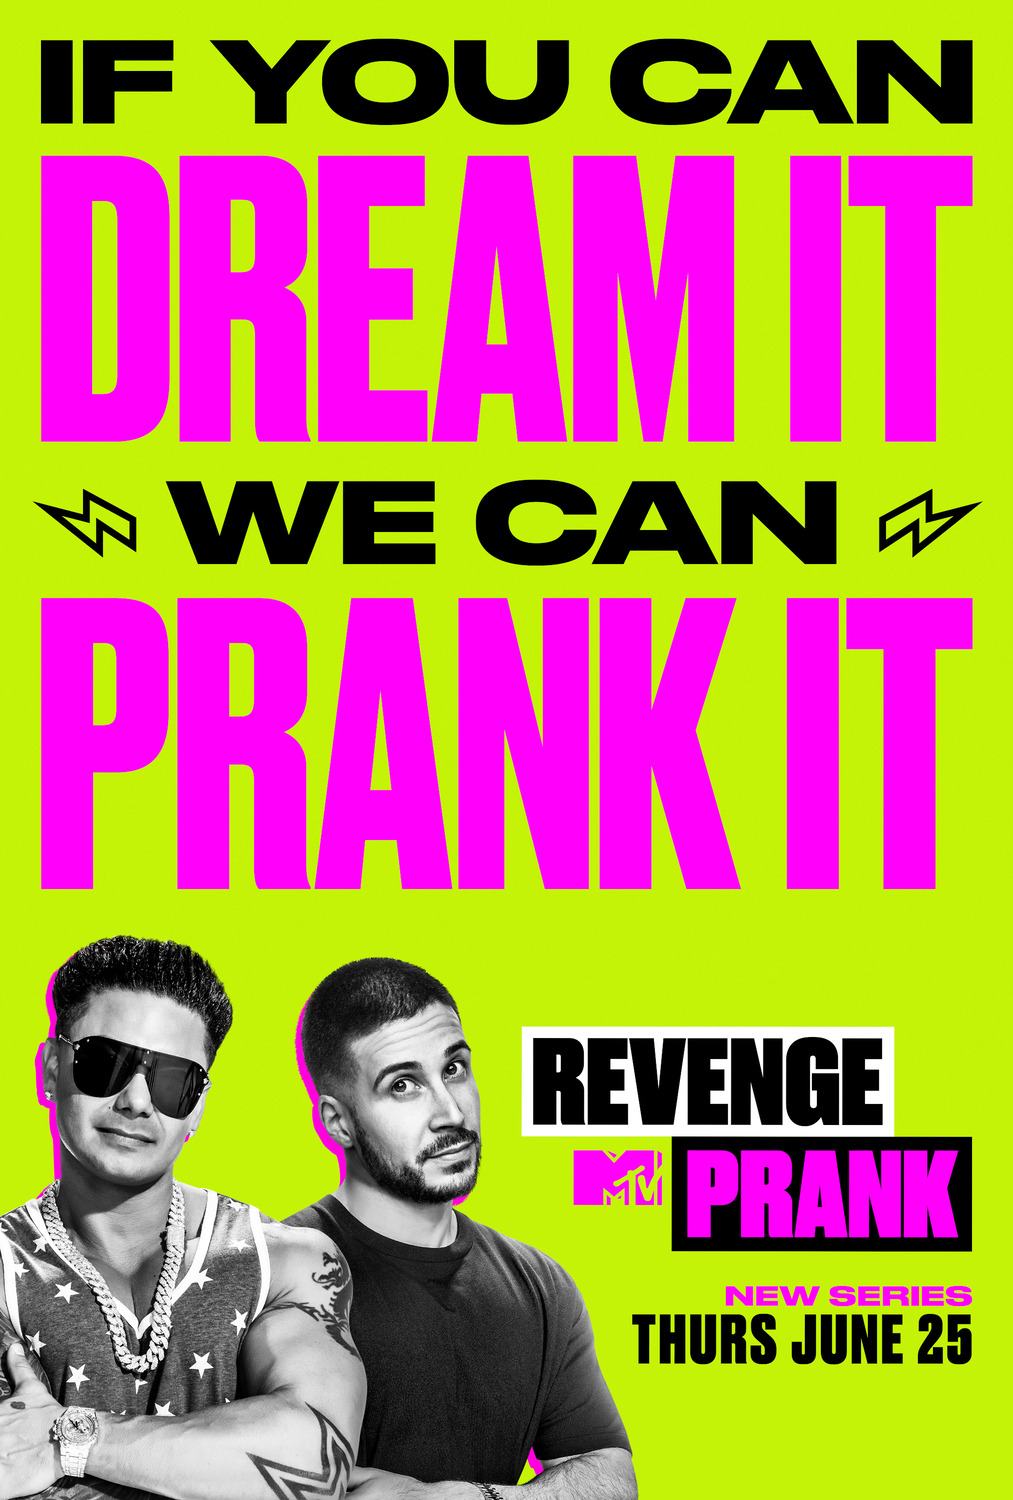 Extra Large TV Poster Image for Revenge Prank 